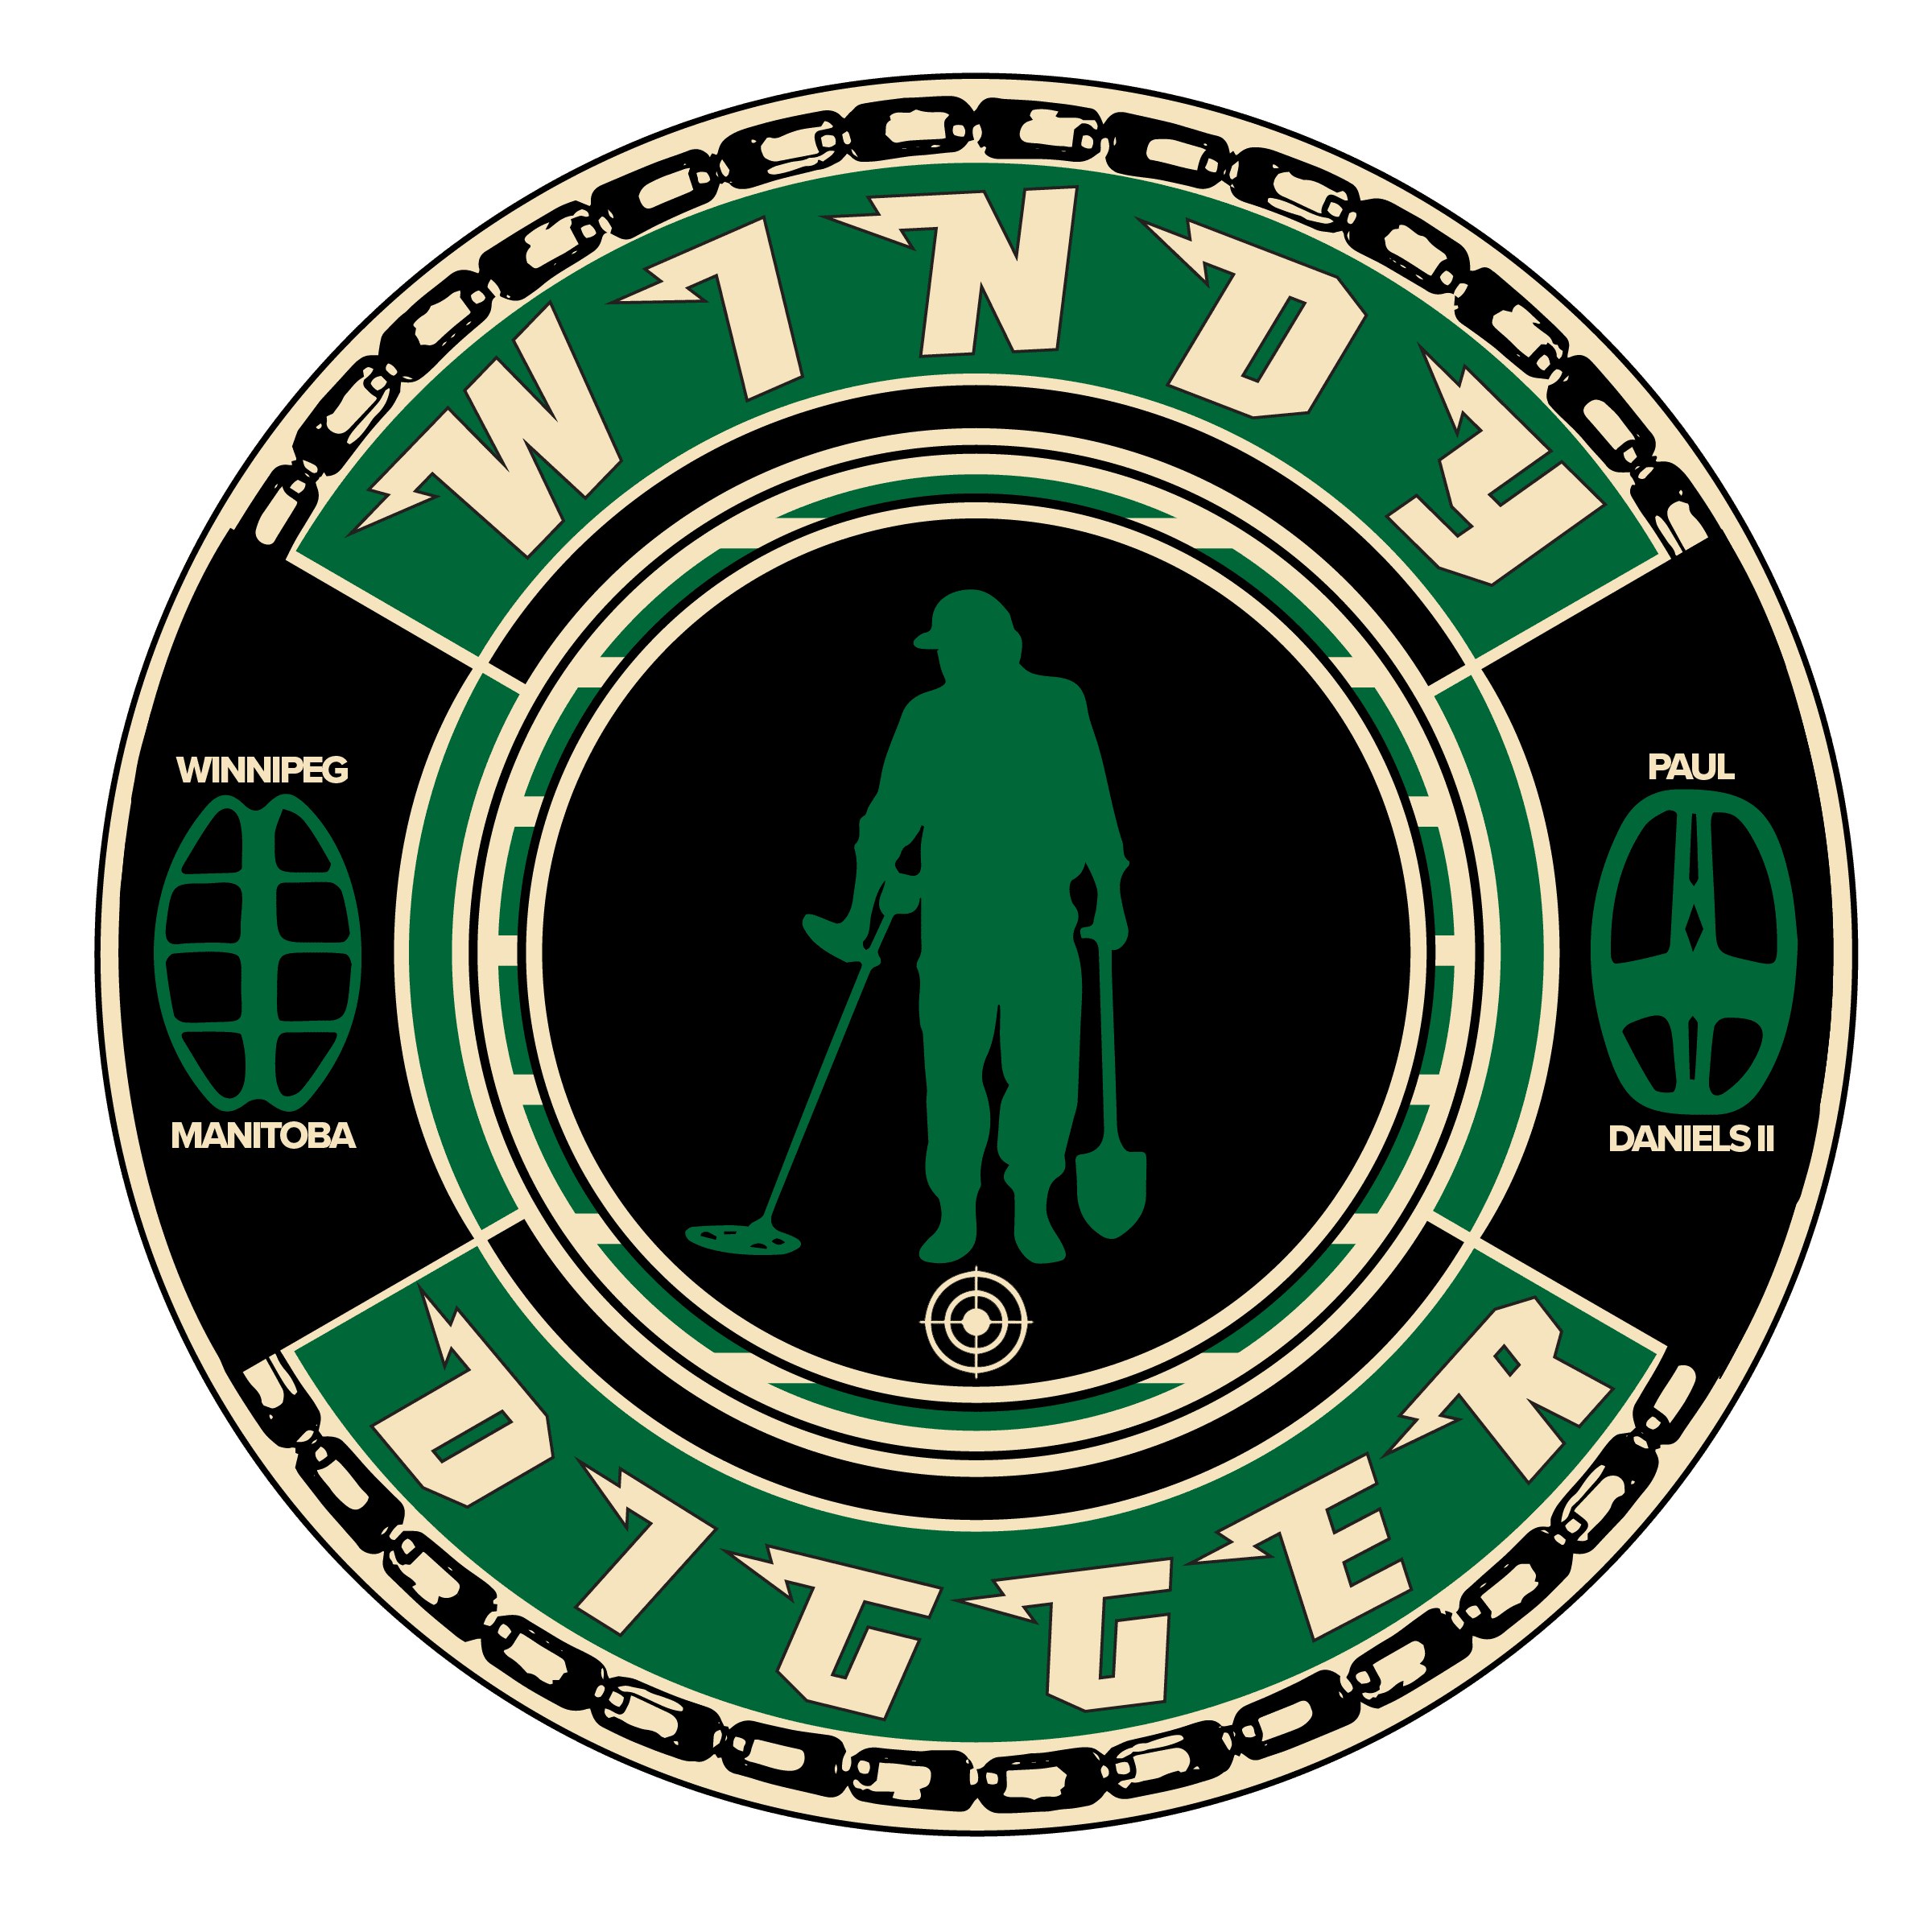 Windy Digger Merchandising Company